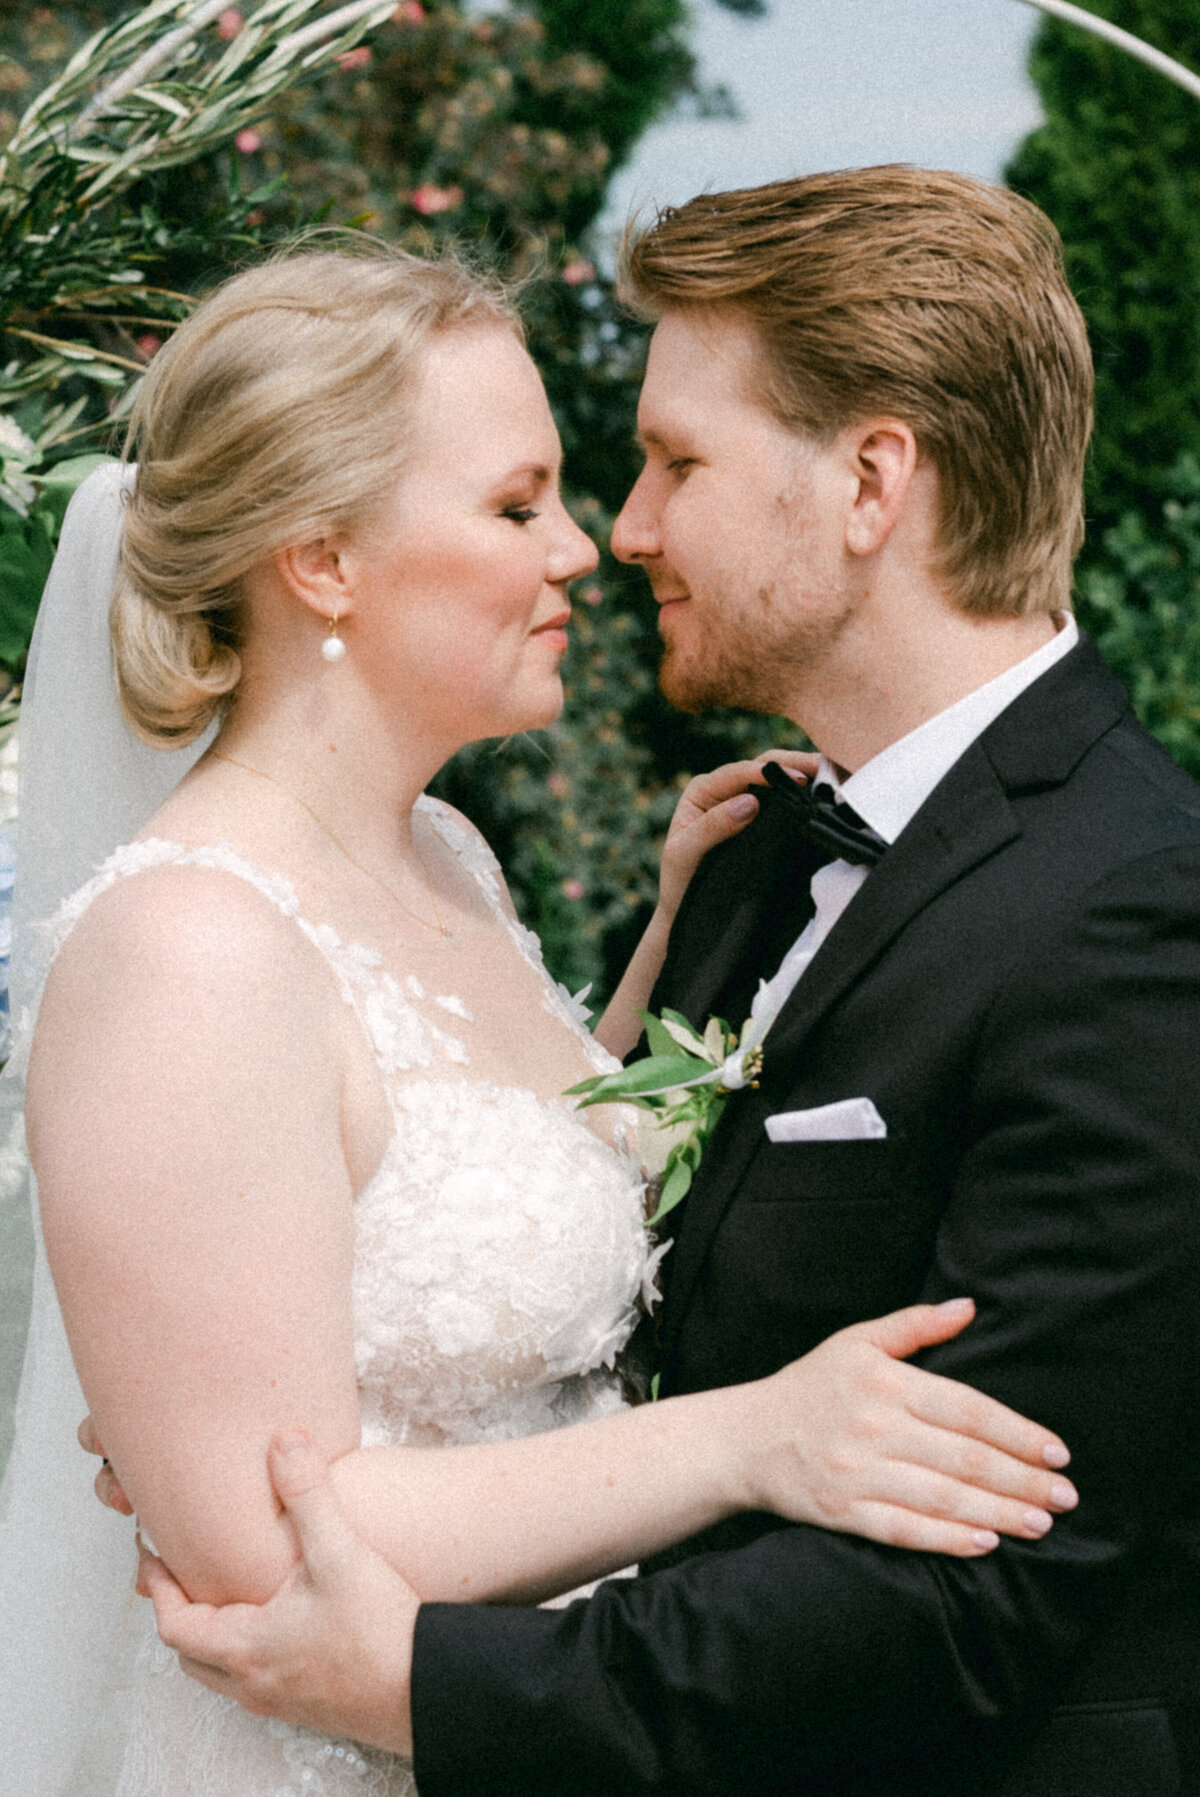 The wedding couple photographed by wedding photographer Hannika Gabrielsson.